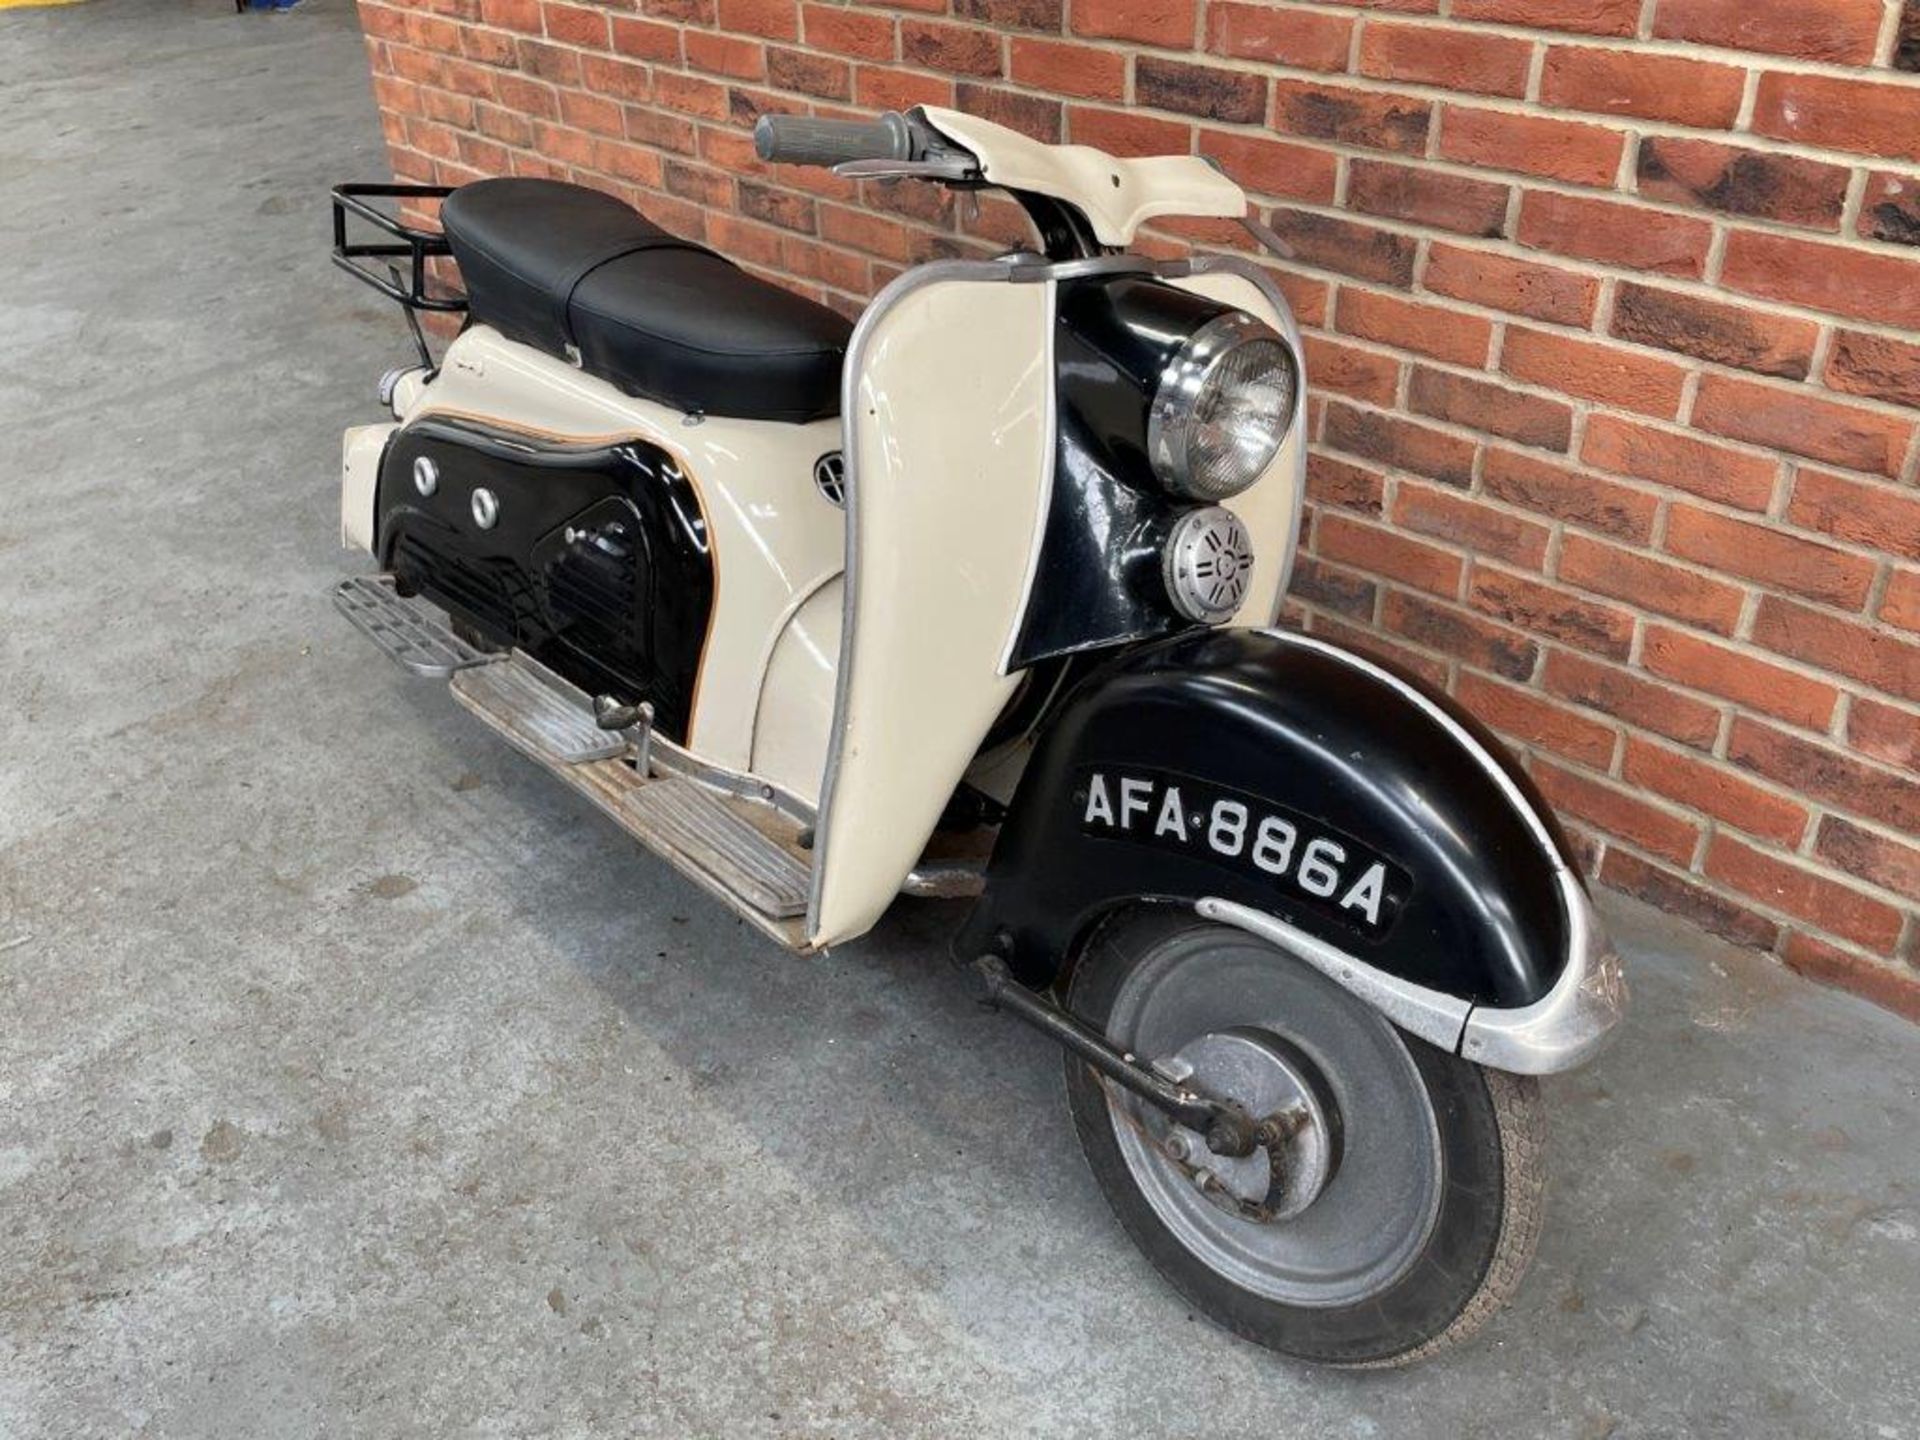 1961 Zundapp Bella 200cc Scooter - Image 2 of 5